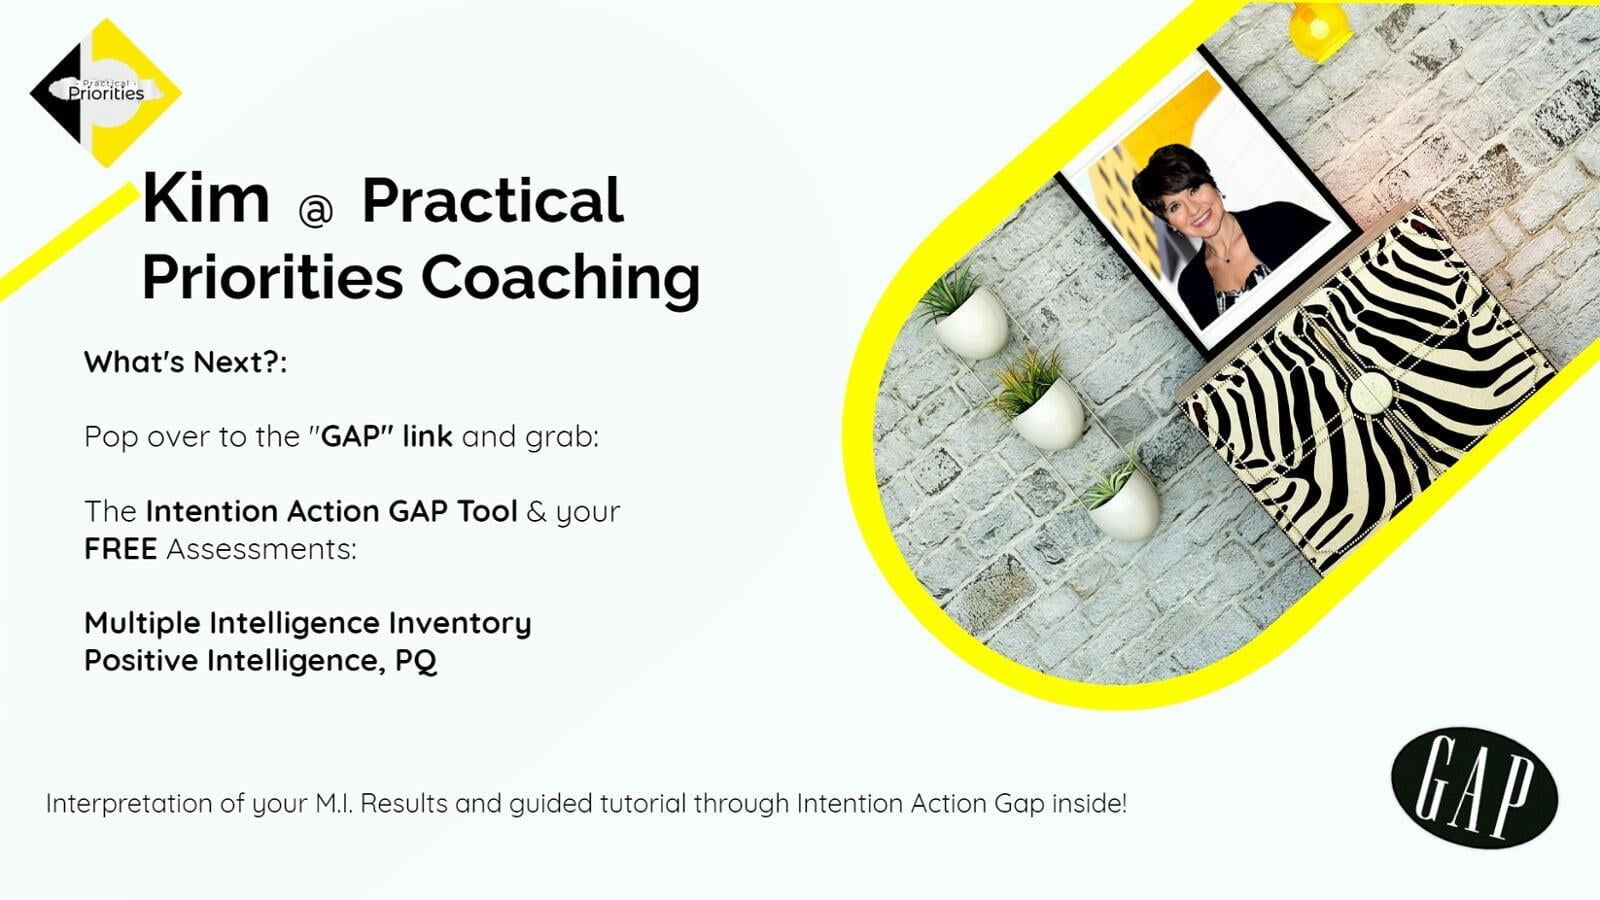 Kim in frame. Practical Priorities coaching.  Gap link.  Intention Action Gap tool.